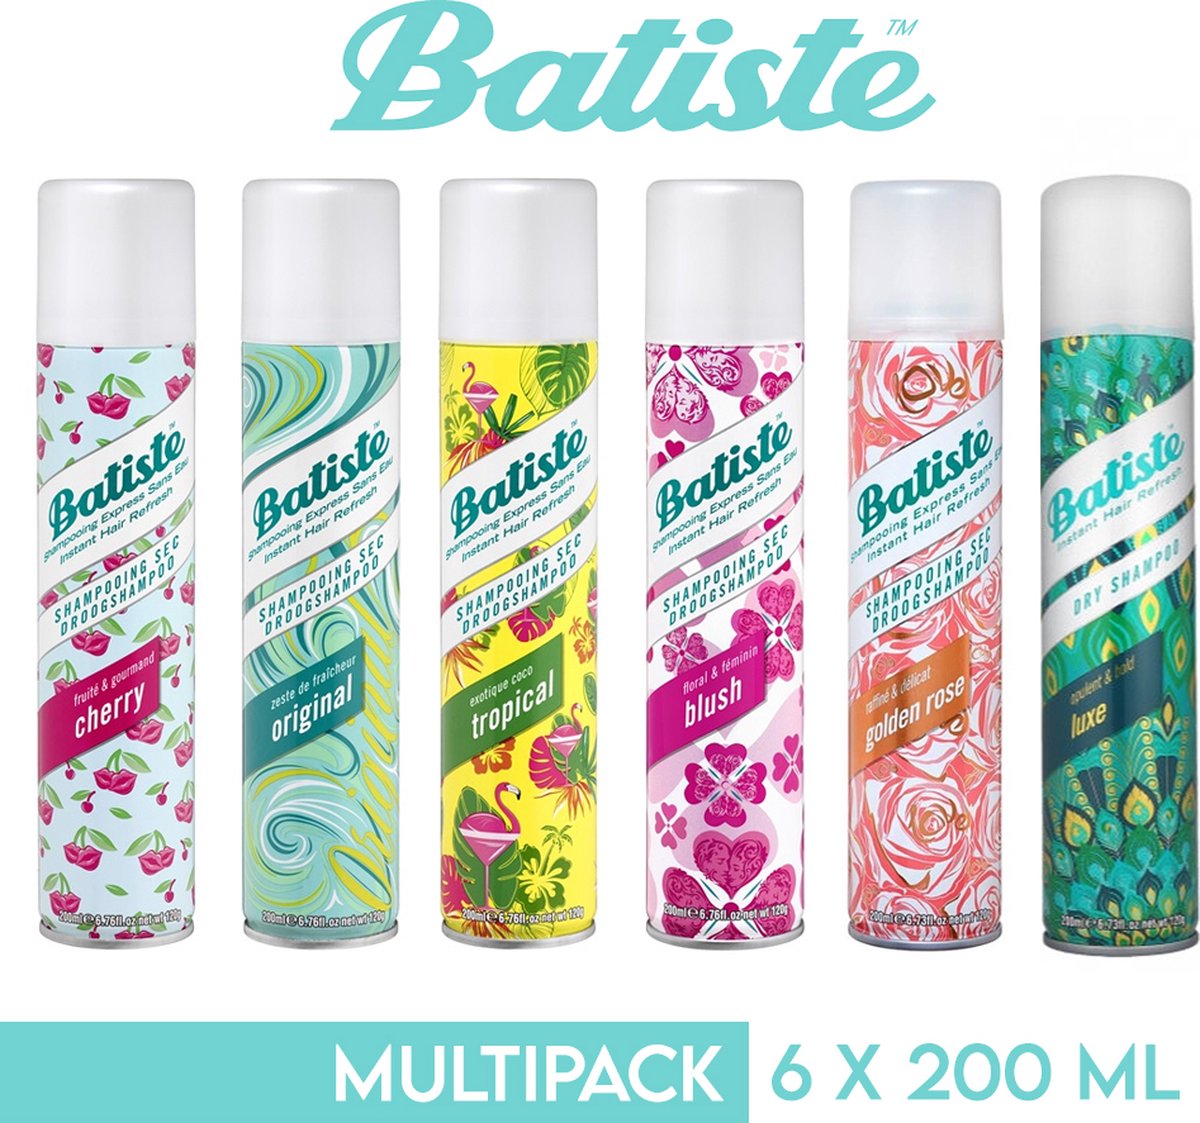 Batiste Droogshampoo Multipack - 6 x 200ml - Tropical, Cherry, Original, Blush, Pineapple, Golden Rose